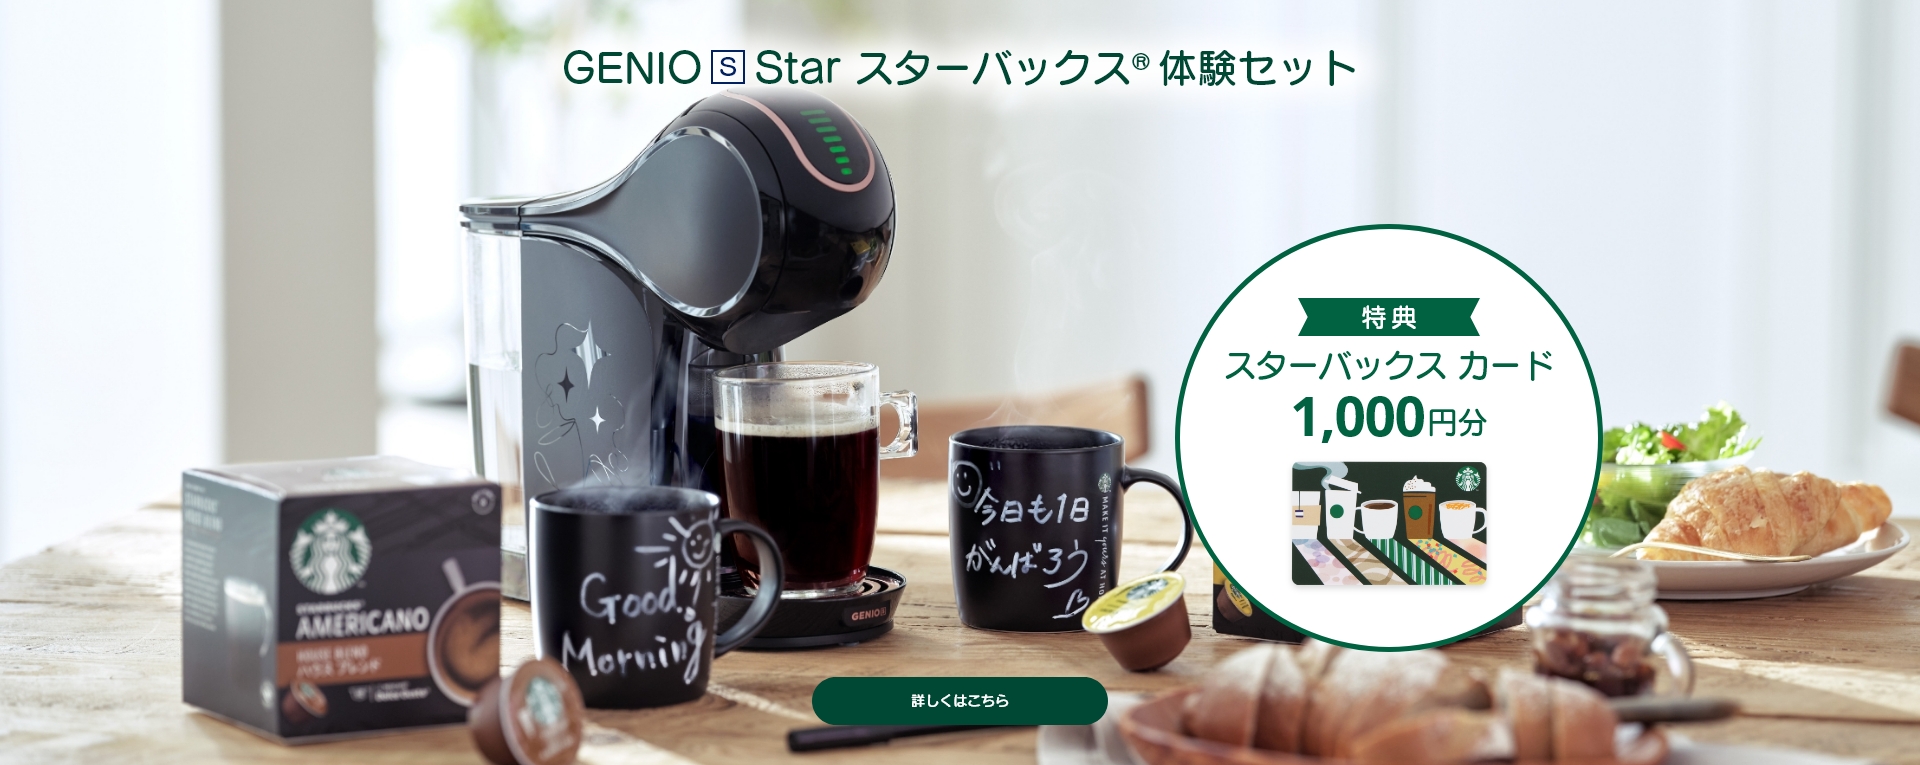 GENIO S Star スターバックス 体験セット